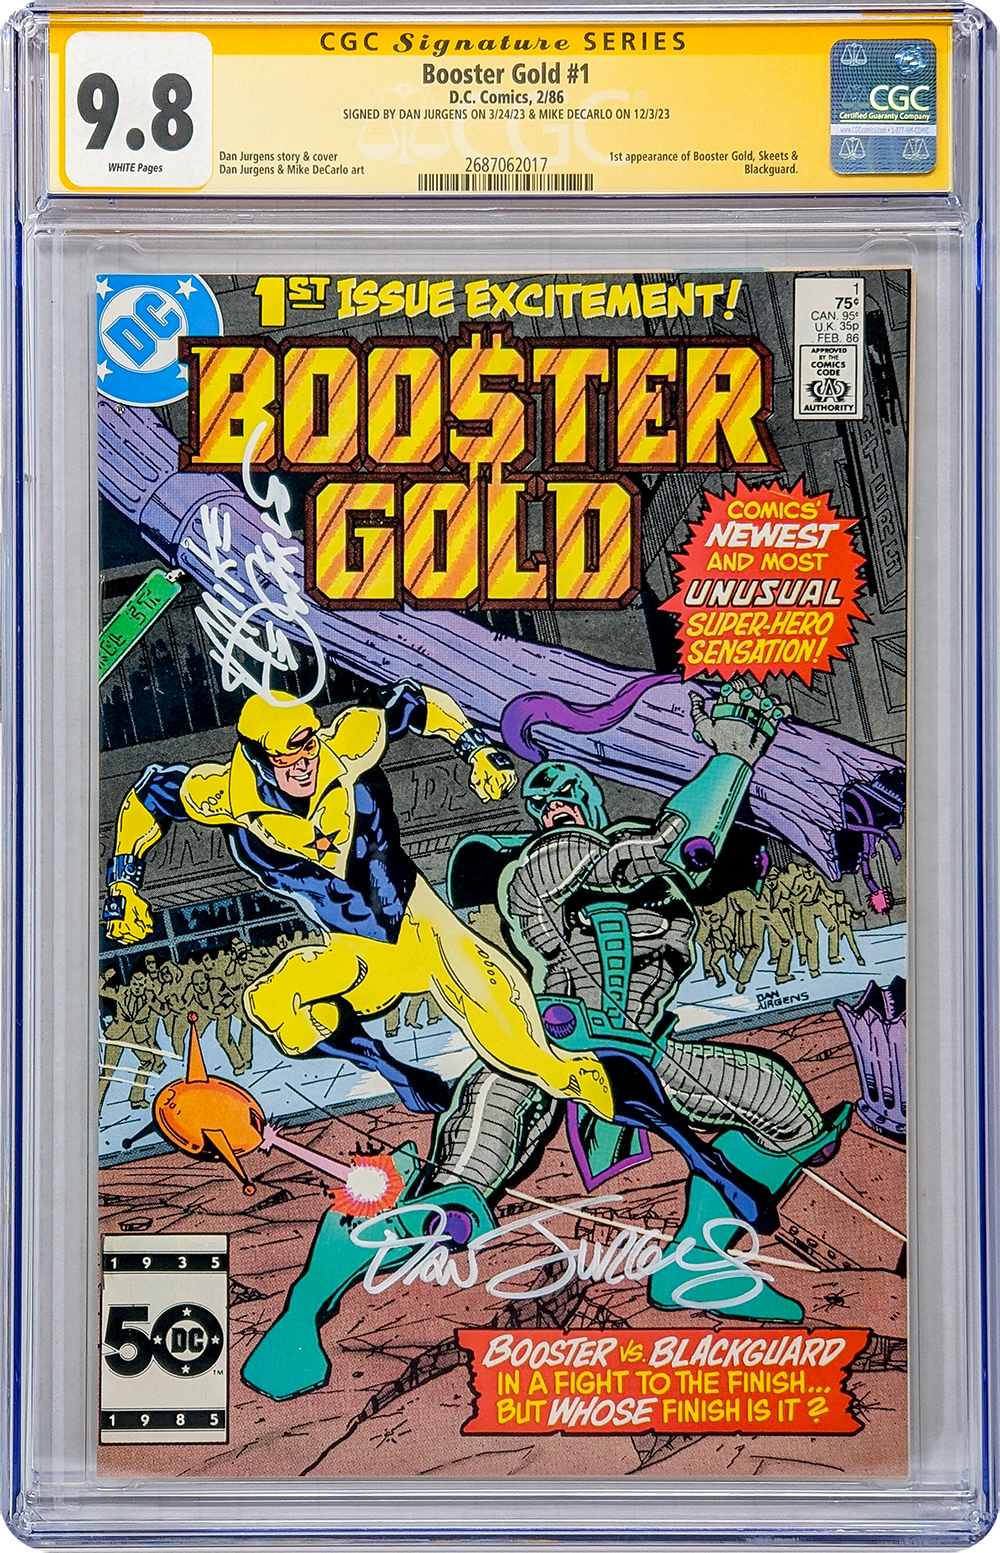 Booster Gold #1 DC Comics CGC Signature Series 9.8 Cast x2 Signed Dan Jurgens, Mike DeCarlo